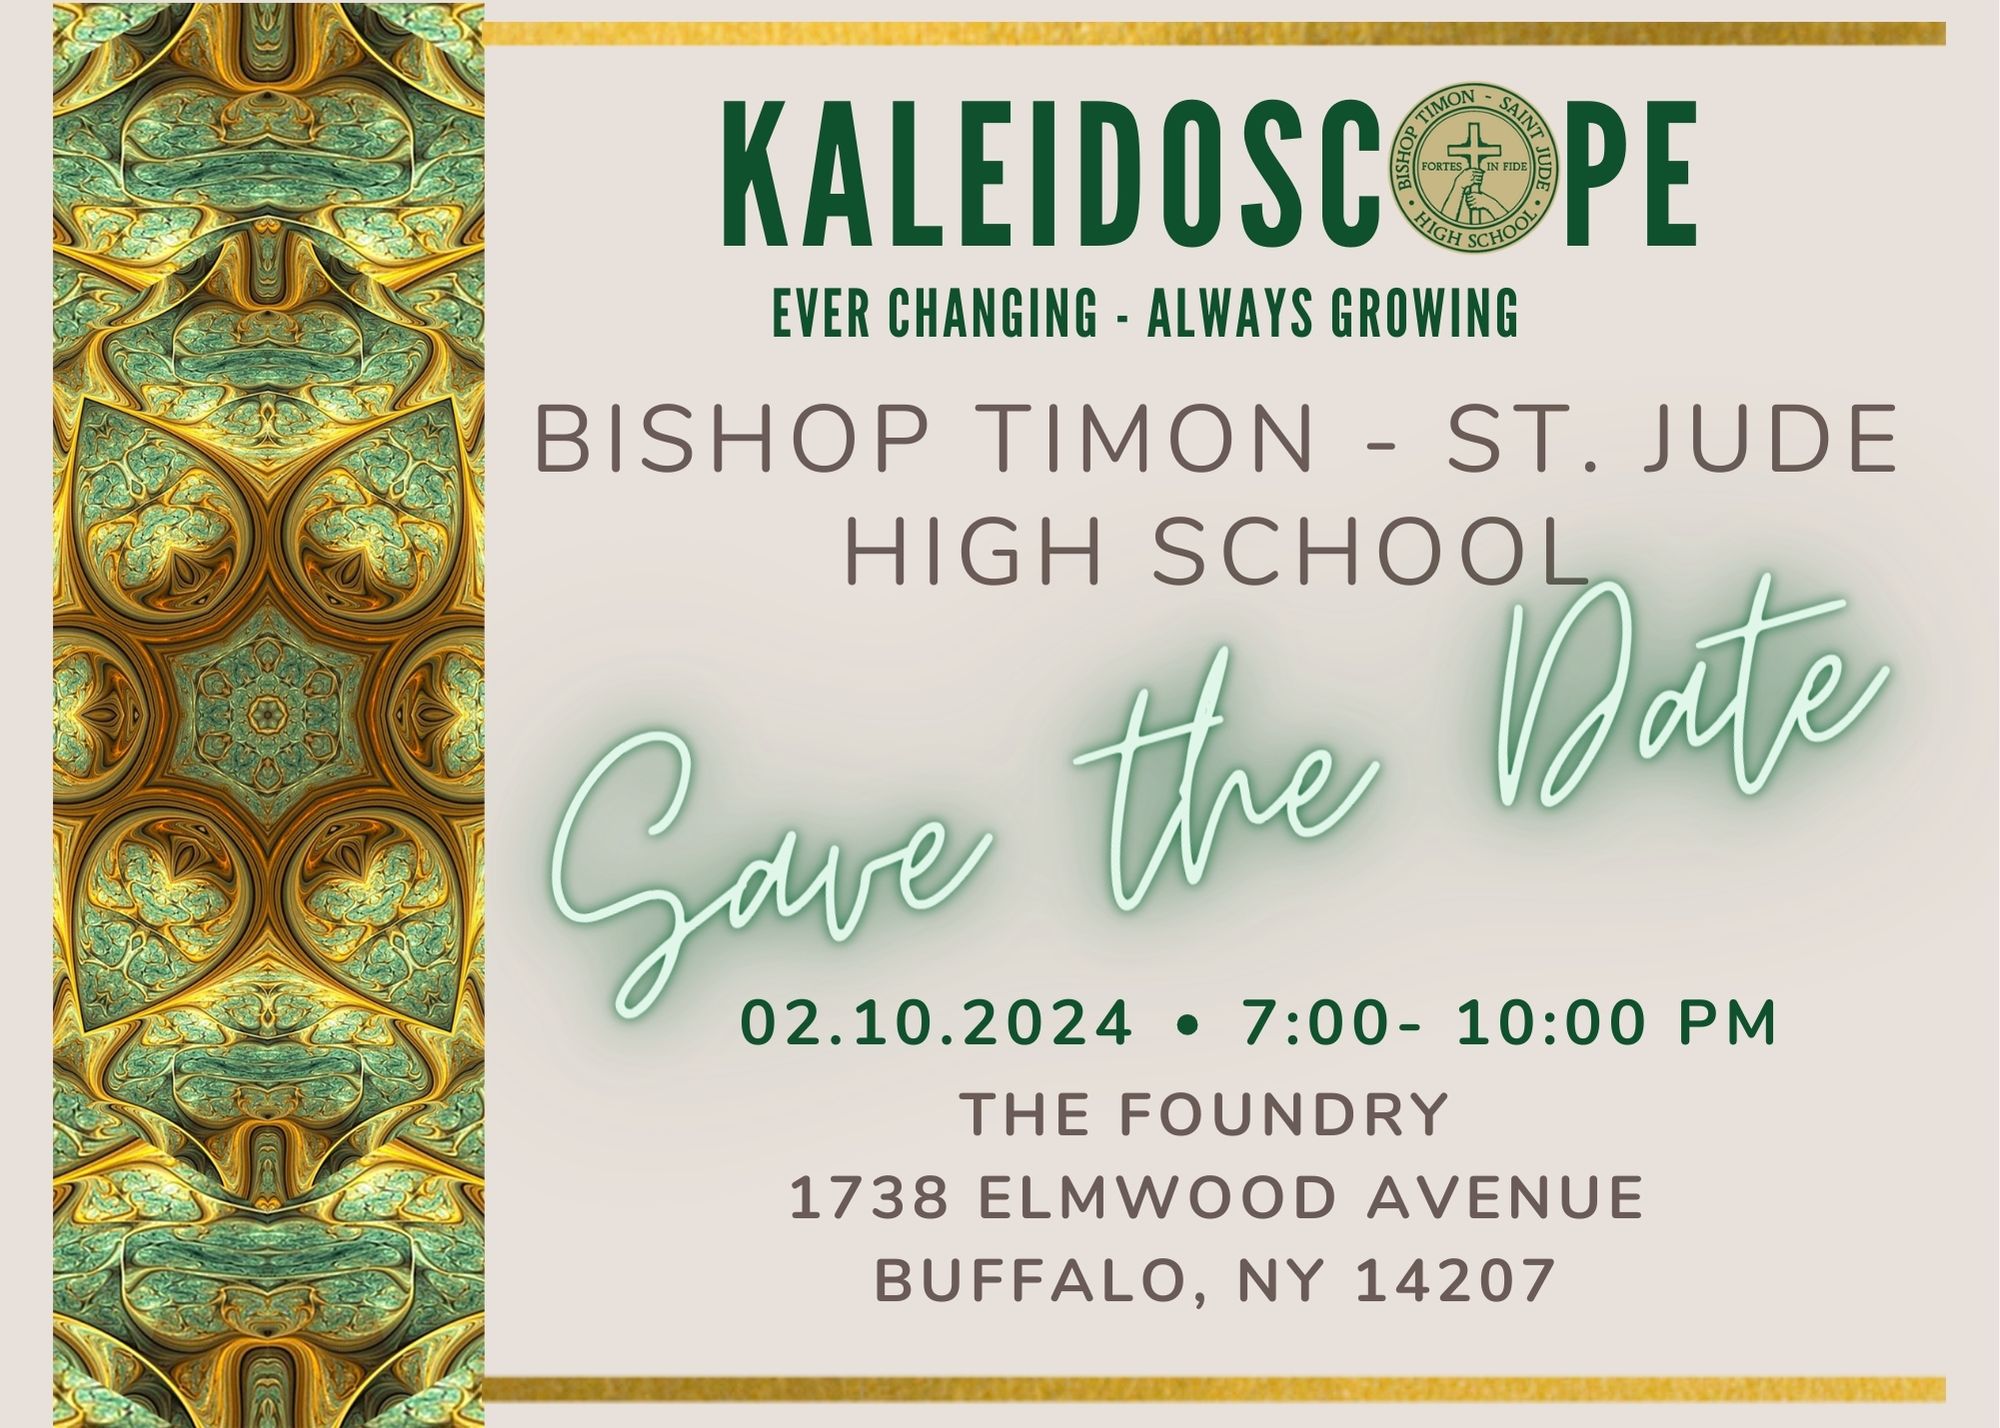 Bishop Timon Kaleidoscope Save The Date